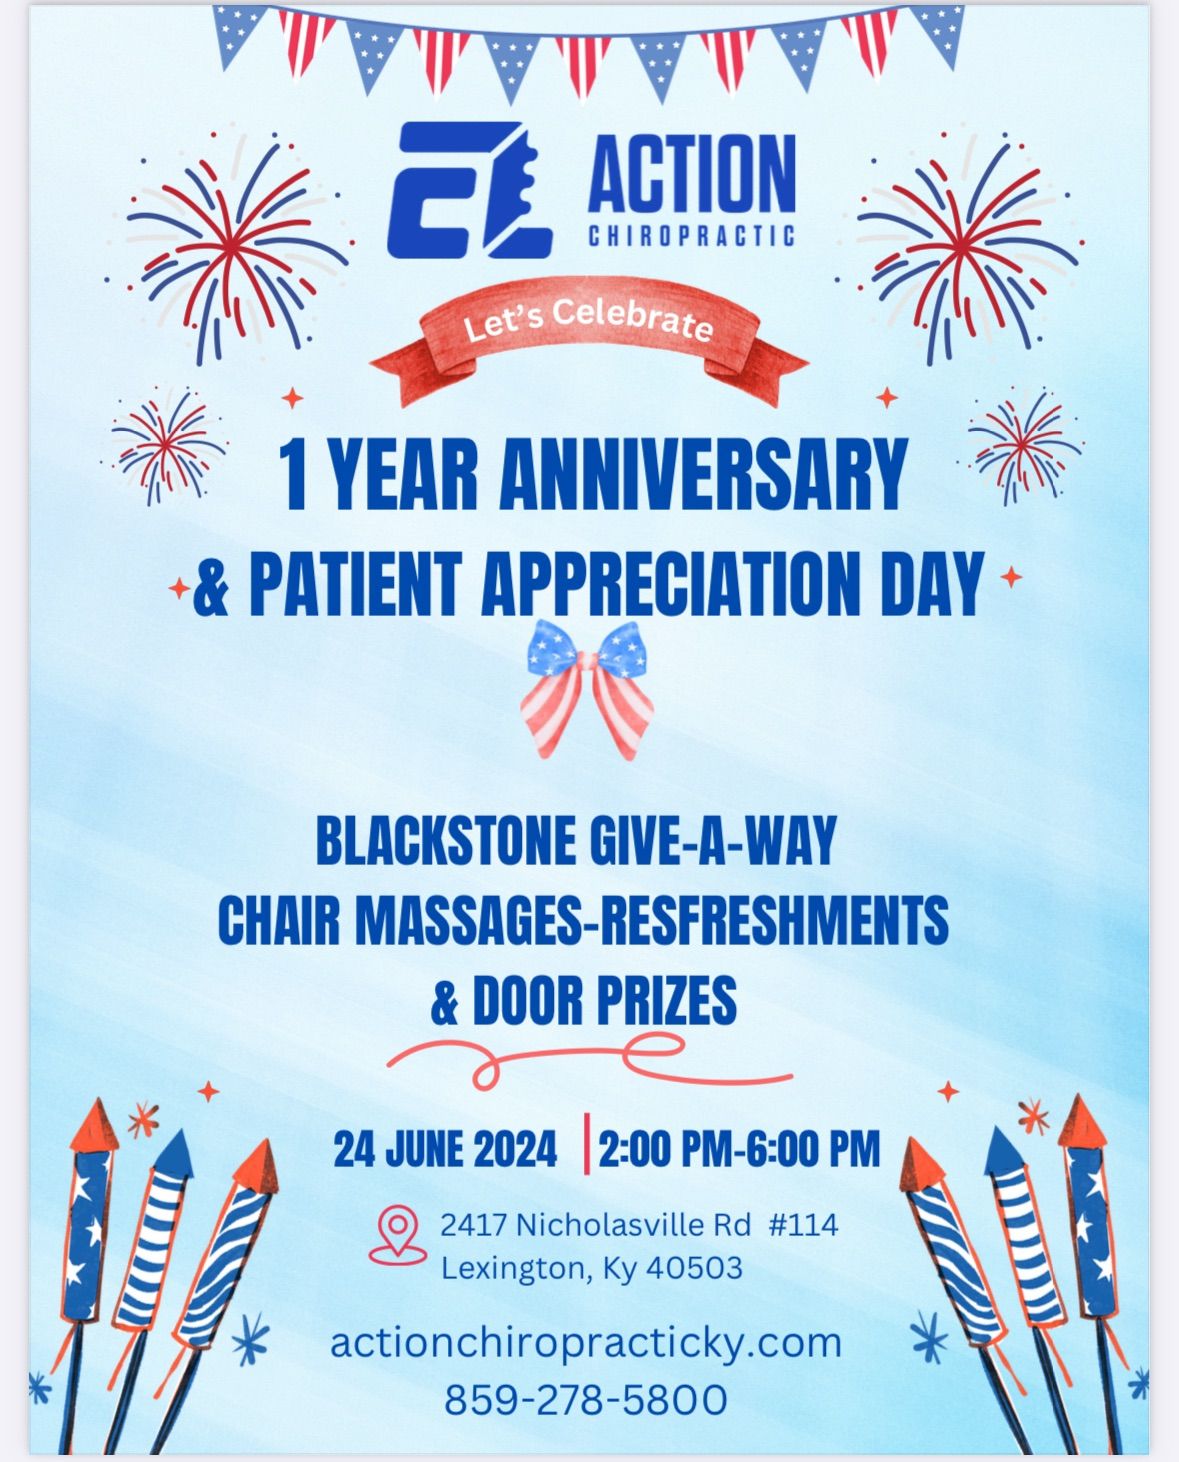 Action Chiropractic's 1 Year Anniversary Celebration